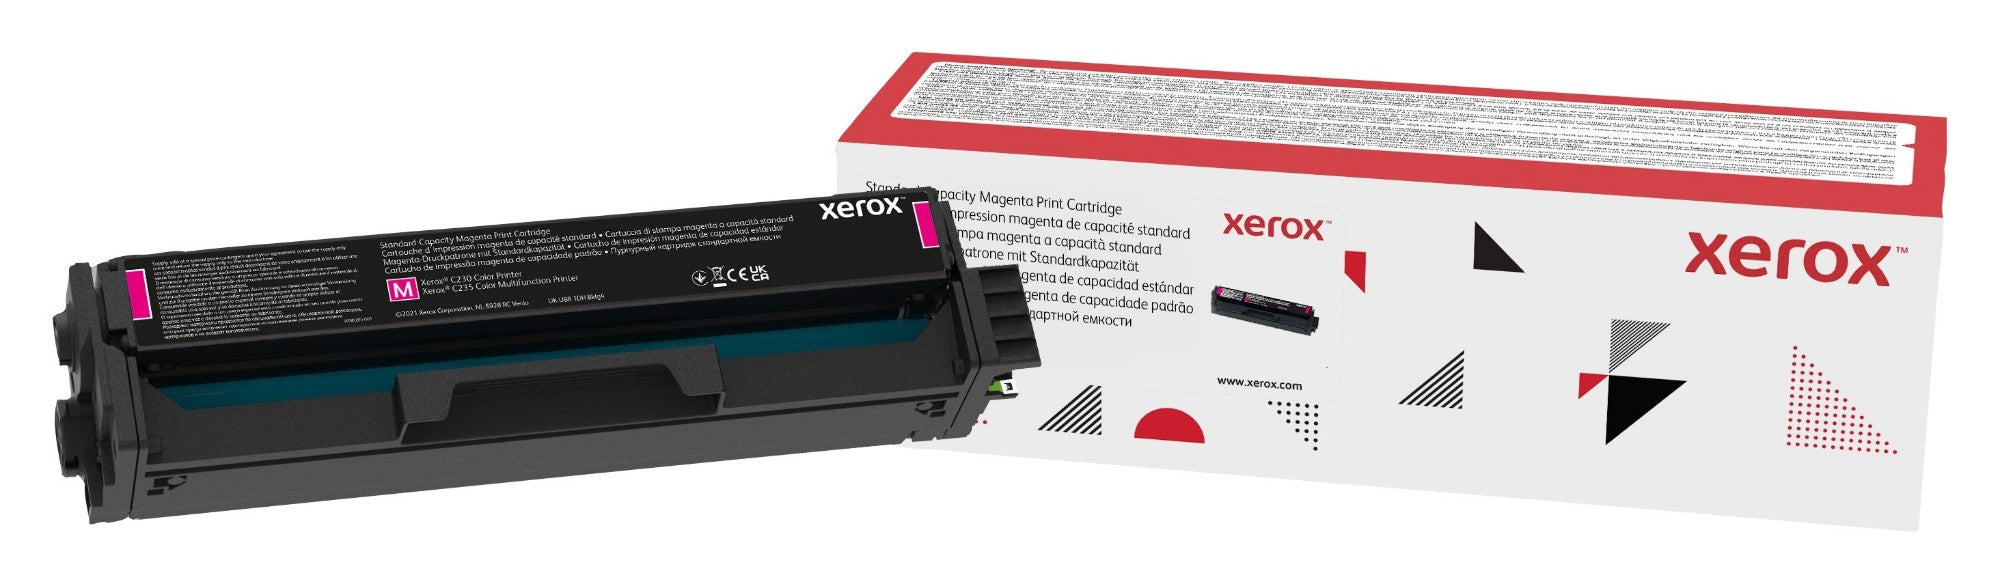 Xerox 006R04385 Toner cartridge magenta, 1.5K pages ISO/IEC 19752 for Xerox C 230